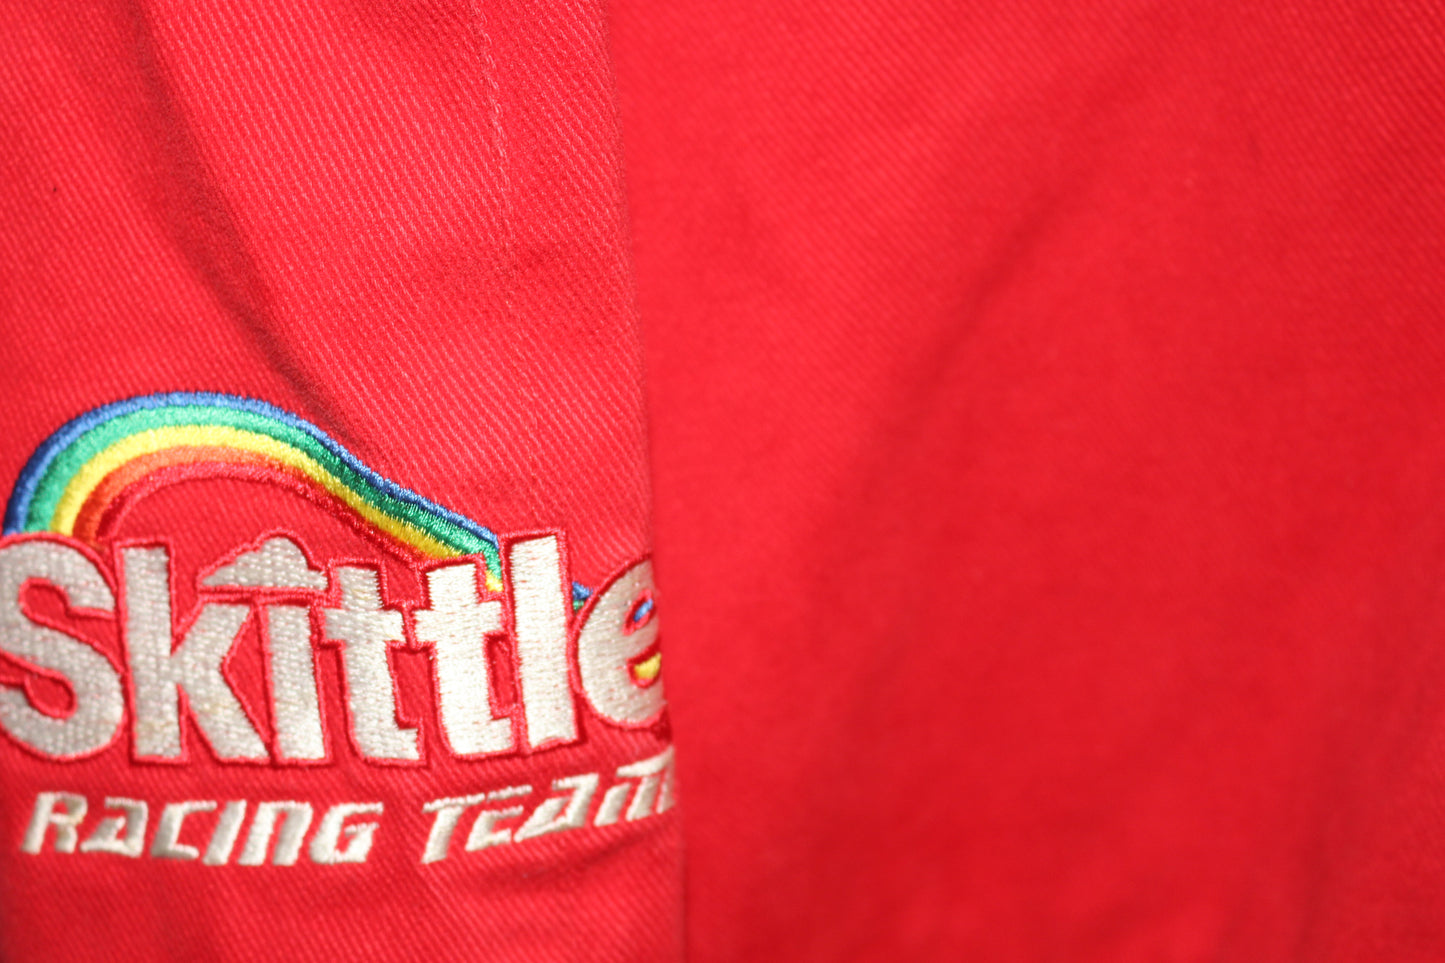 Rare Skittles Racing NASCAR Daytona 500 Ernie Irvin #36 (L)